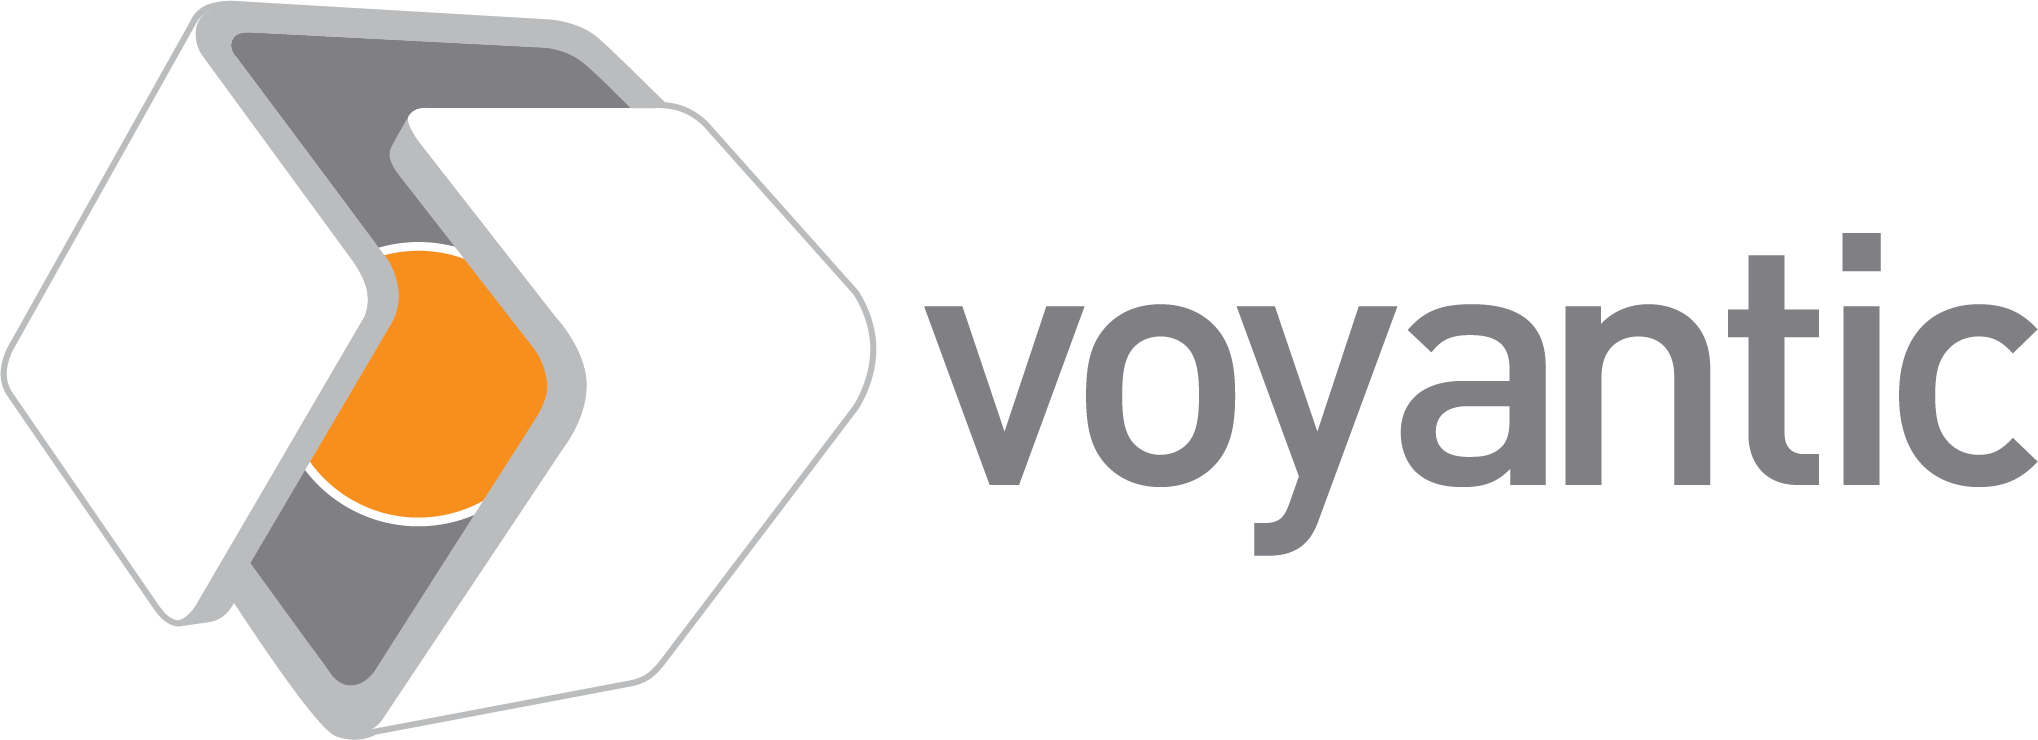 Voyantic- Gold Sponsor